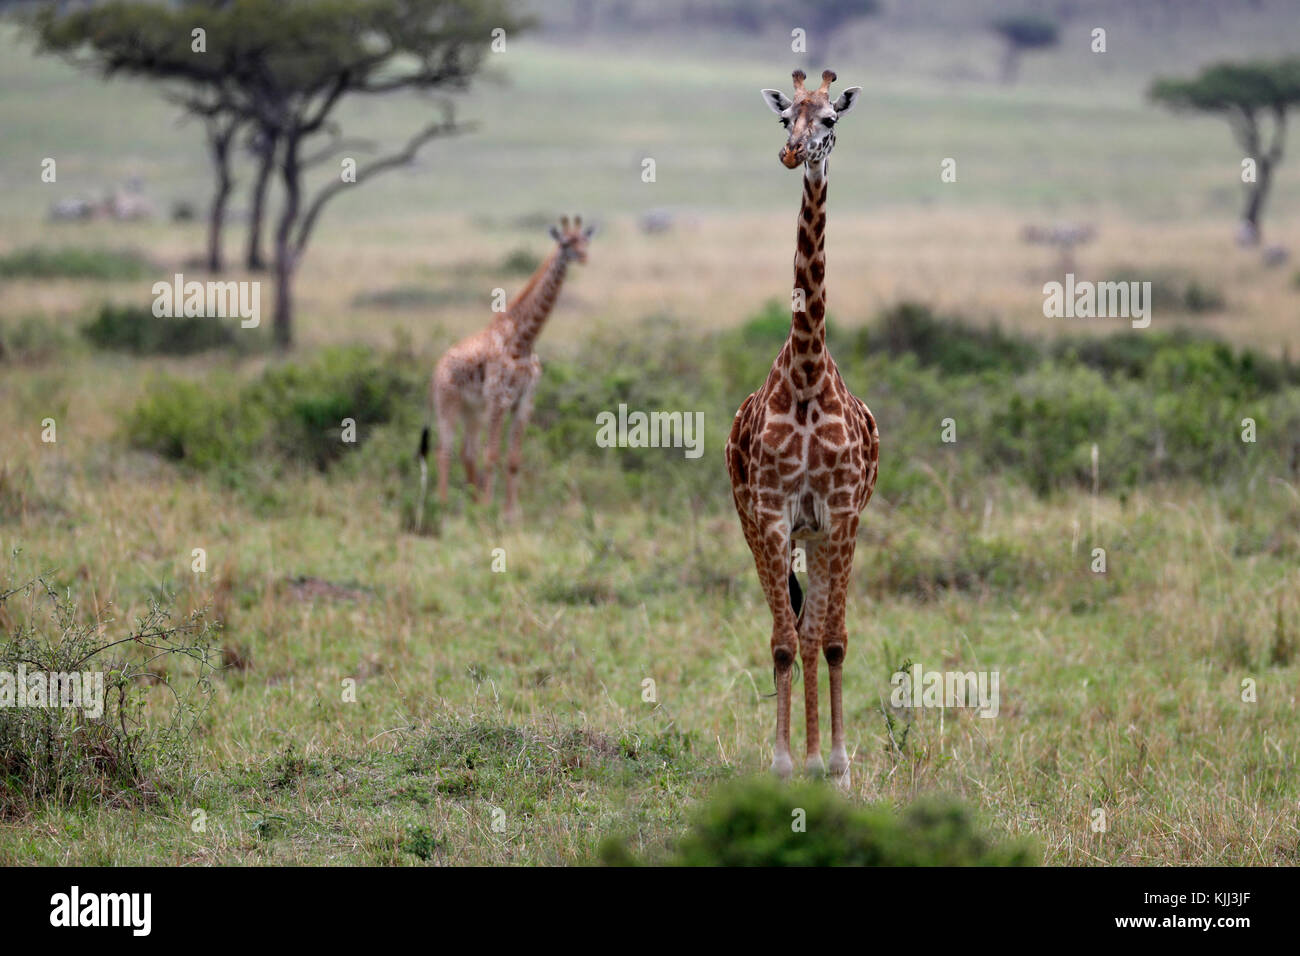 Girafe (Giraffa camelopardalis) dans la savane. Le Masai Mara. Au Kenya. Banque D'Images